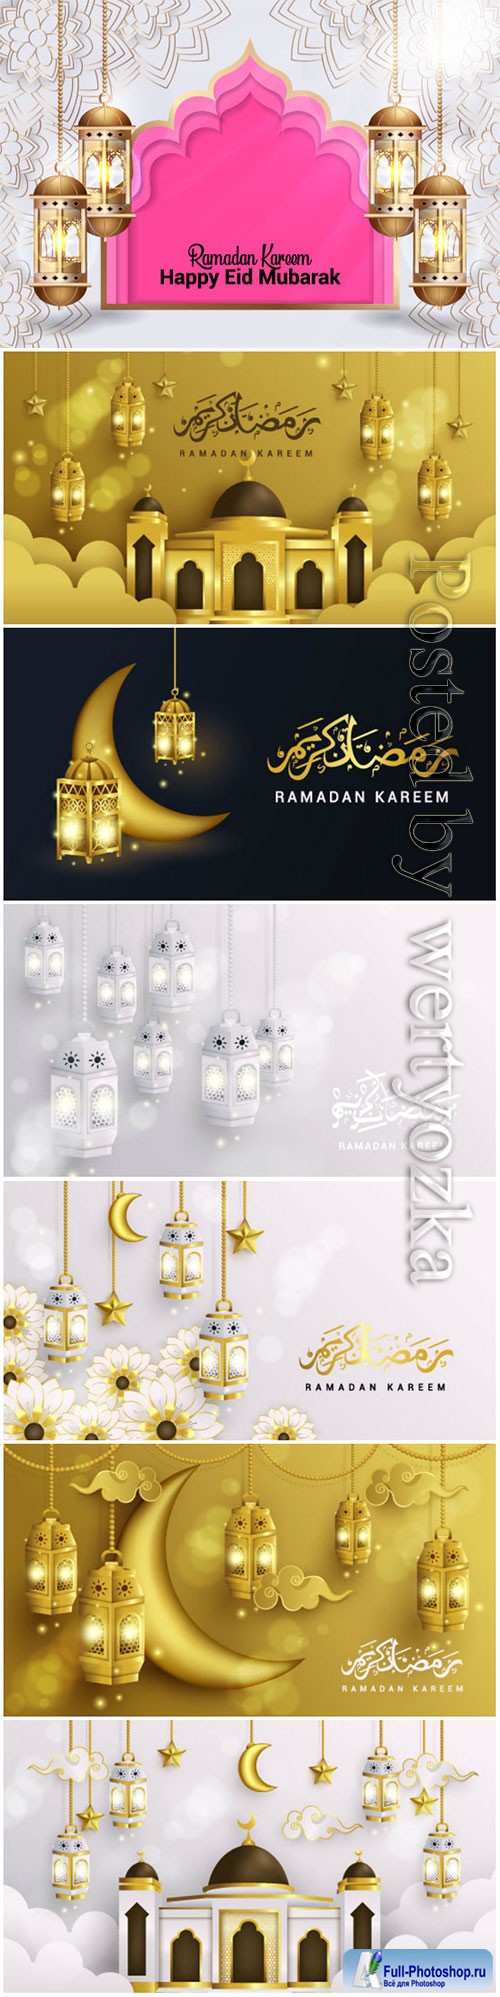 Ramadan Kareem and happy Eid Mubarak background vector